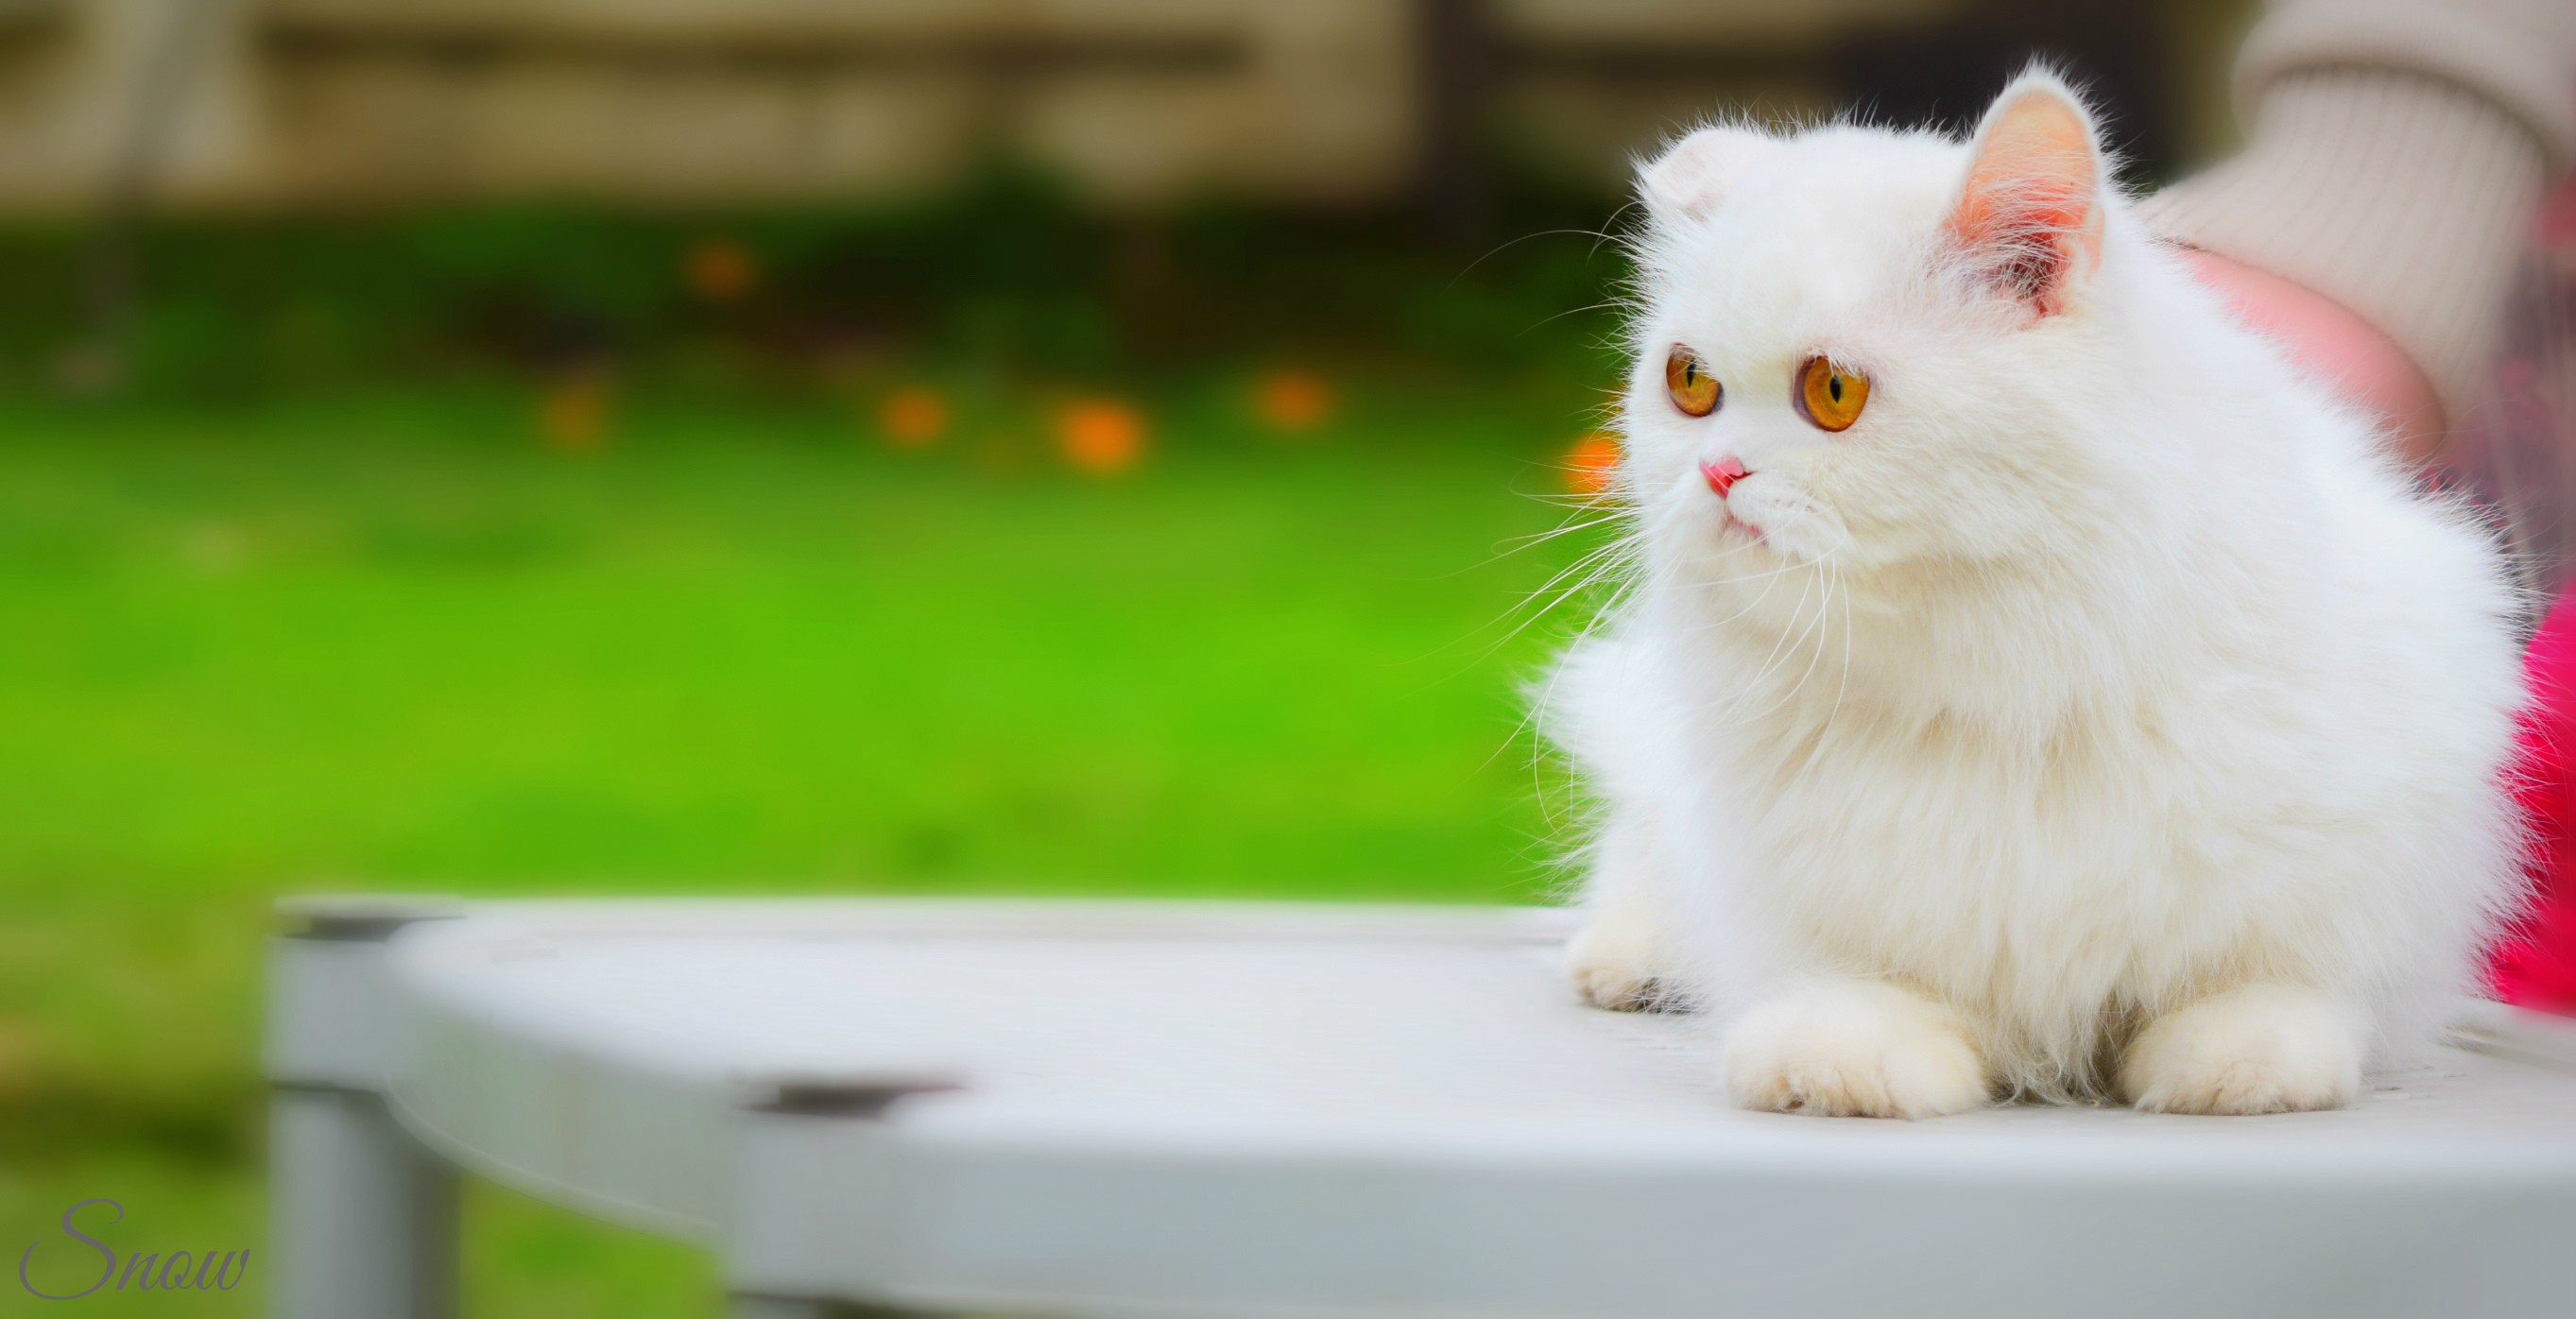 353464 descargar imagen animales, gato persa, gato, gatos: fondos de pantalla y protectores de pantalla gratis